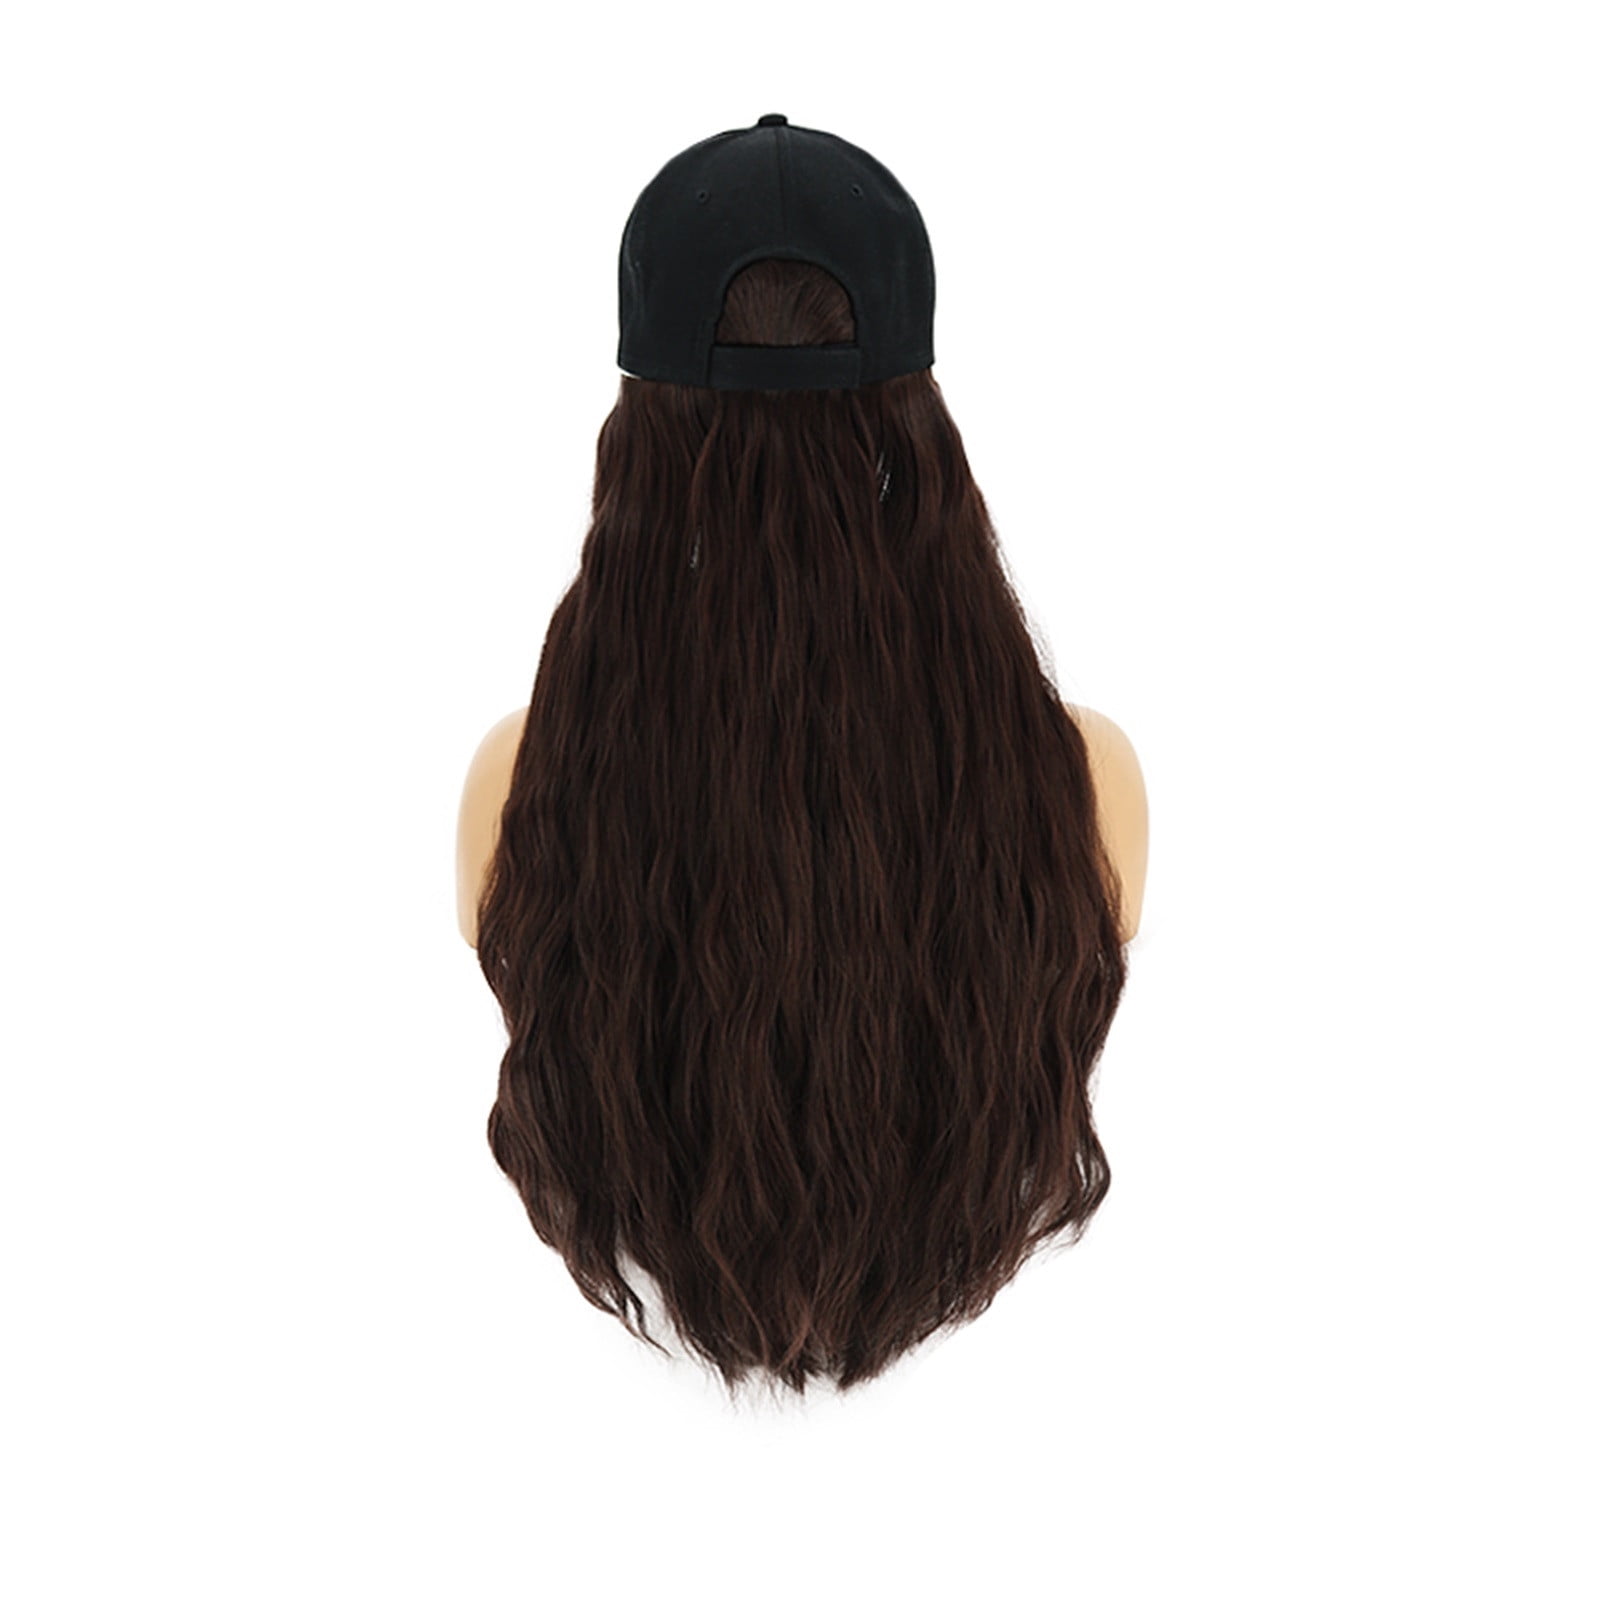 jsaierl Multicolor Corn Perm Long Hair Wig 26 Inch Baseball Cap Casual ...